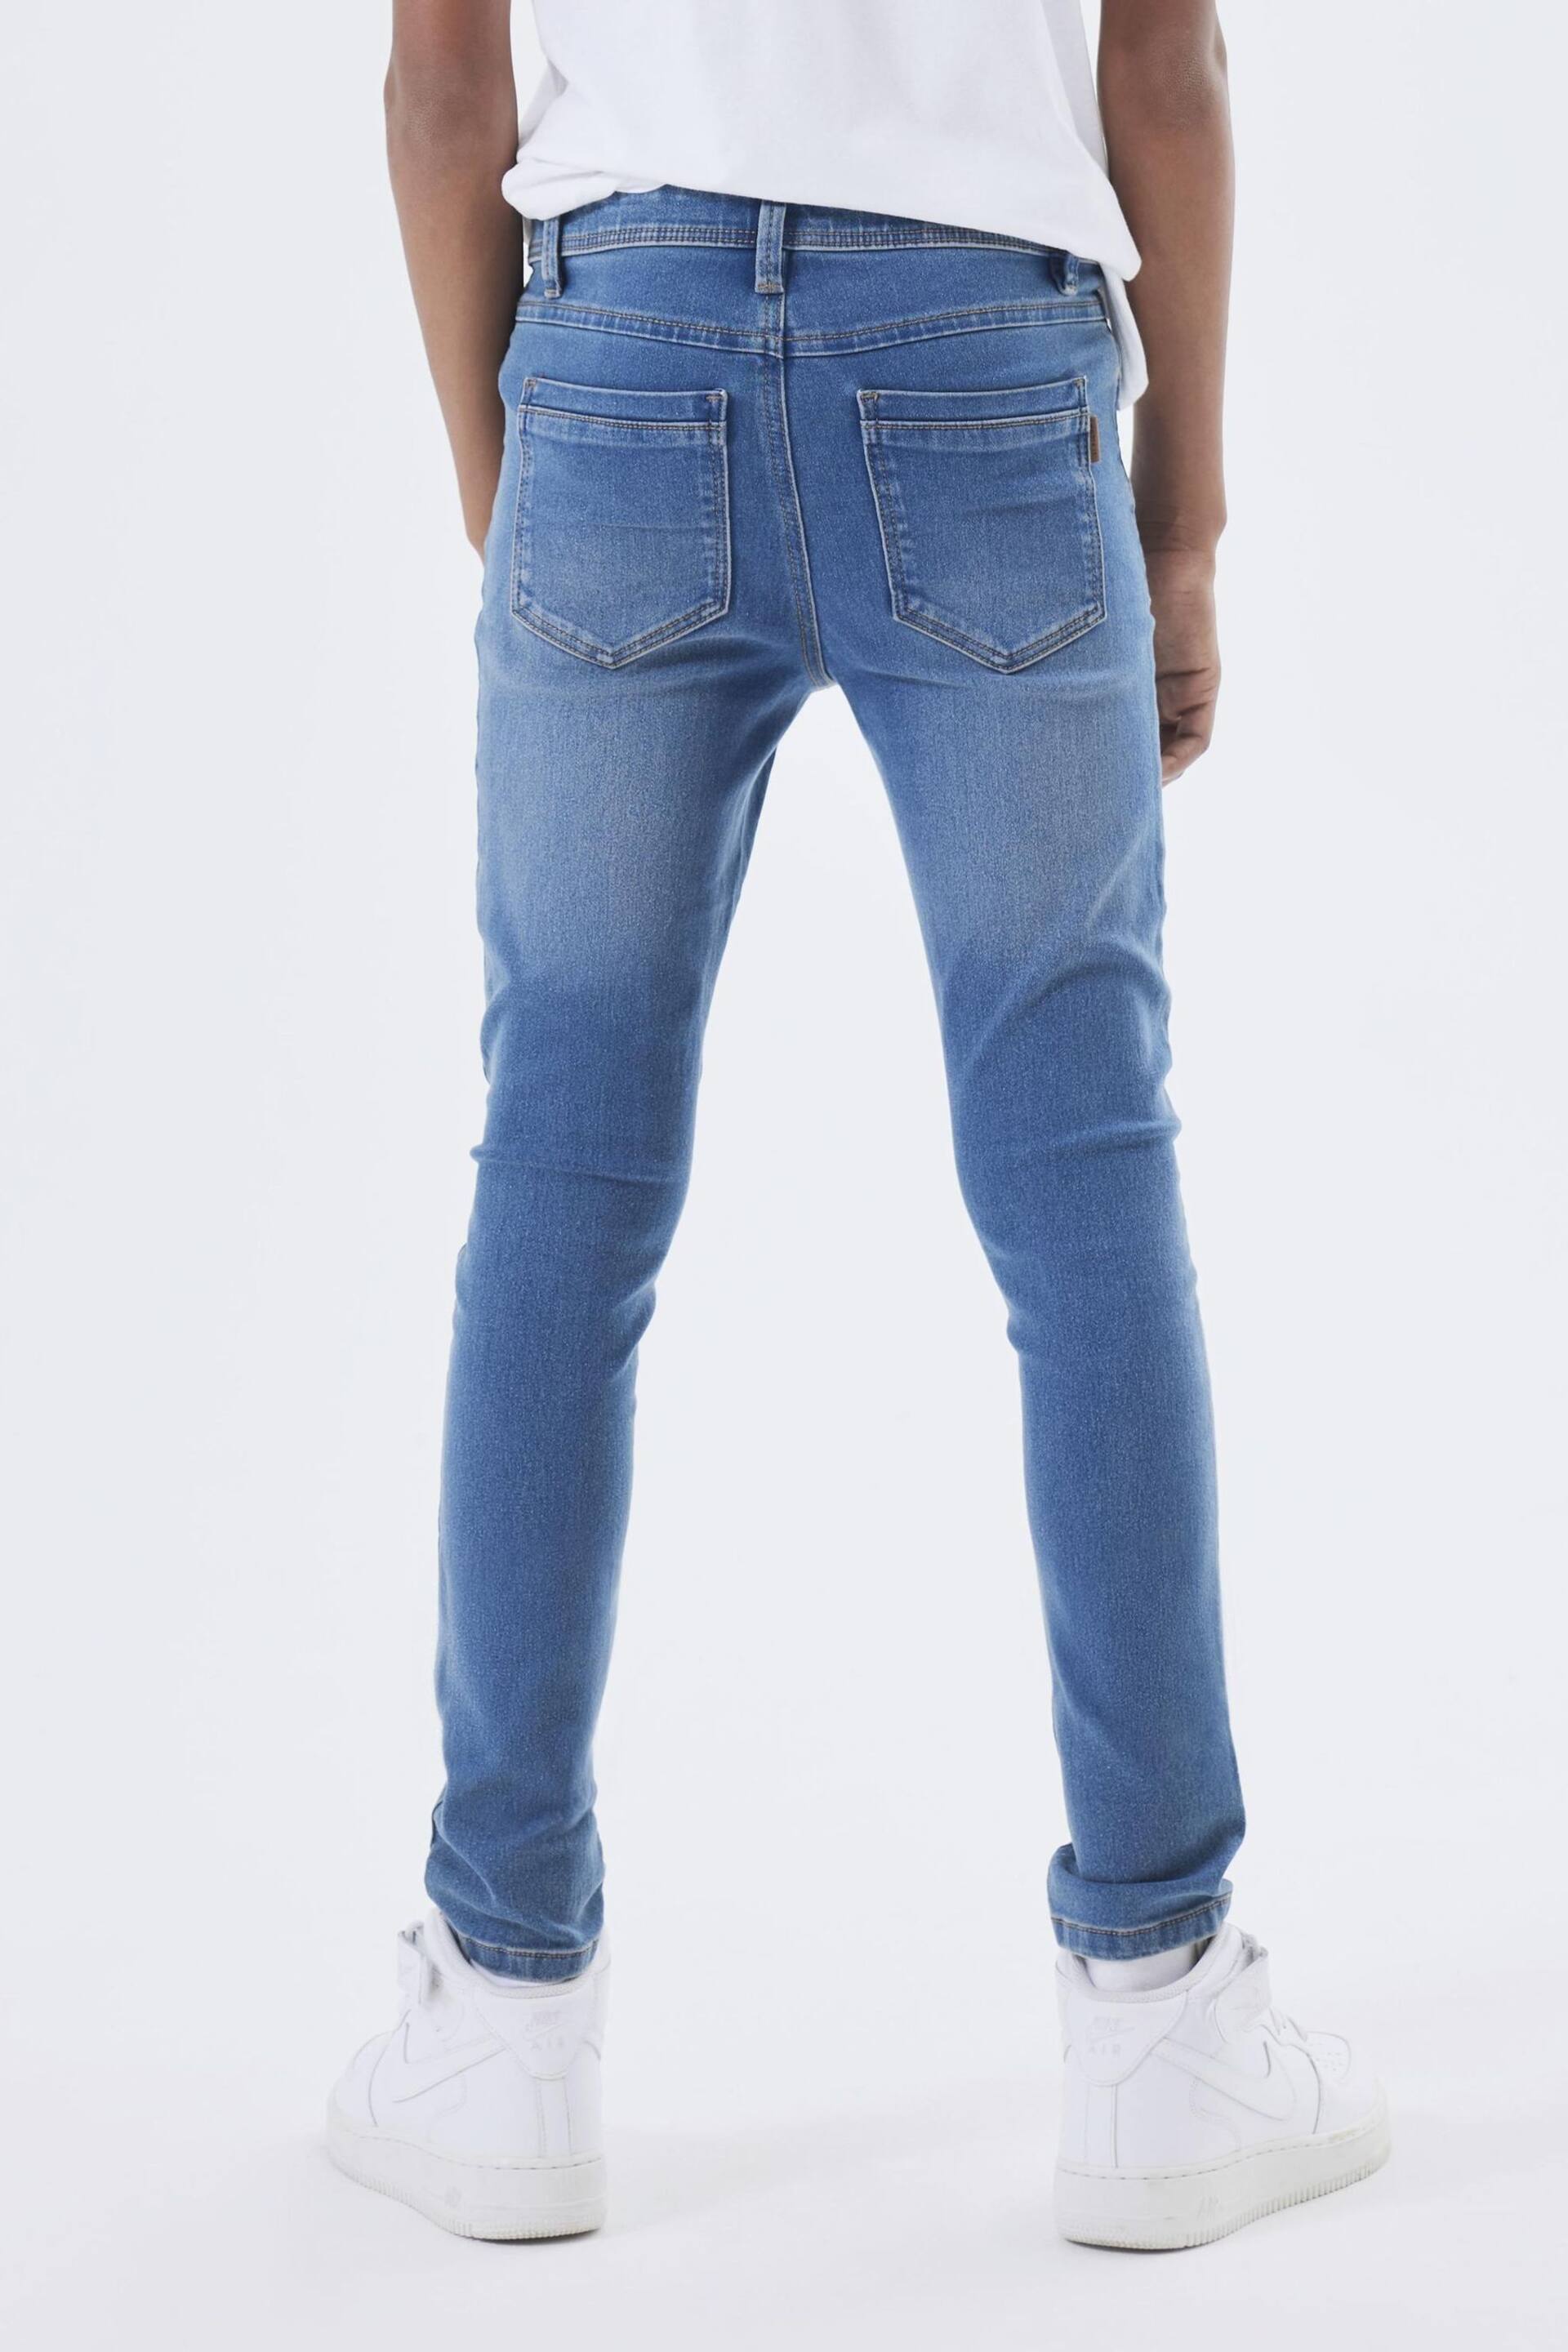 Name It Blue Super Soft Slim Fit Jeans - Image 2 of 5